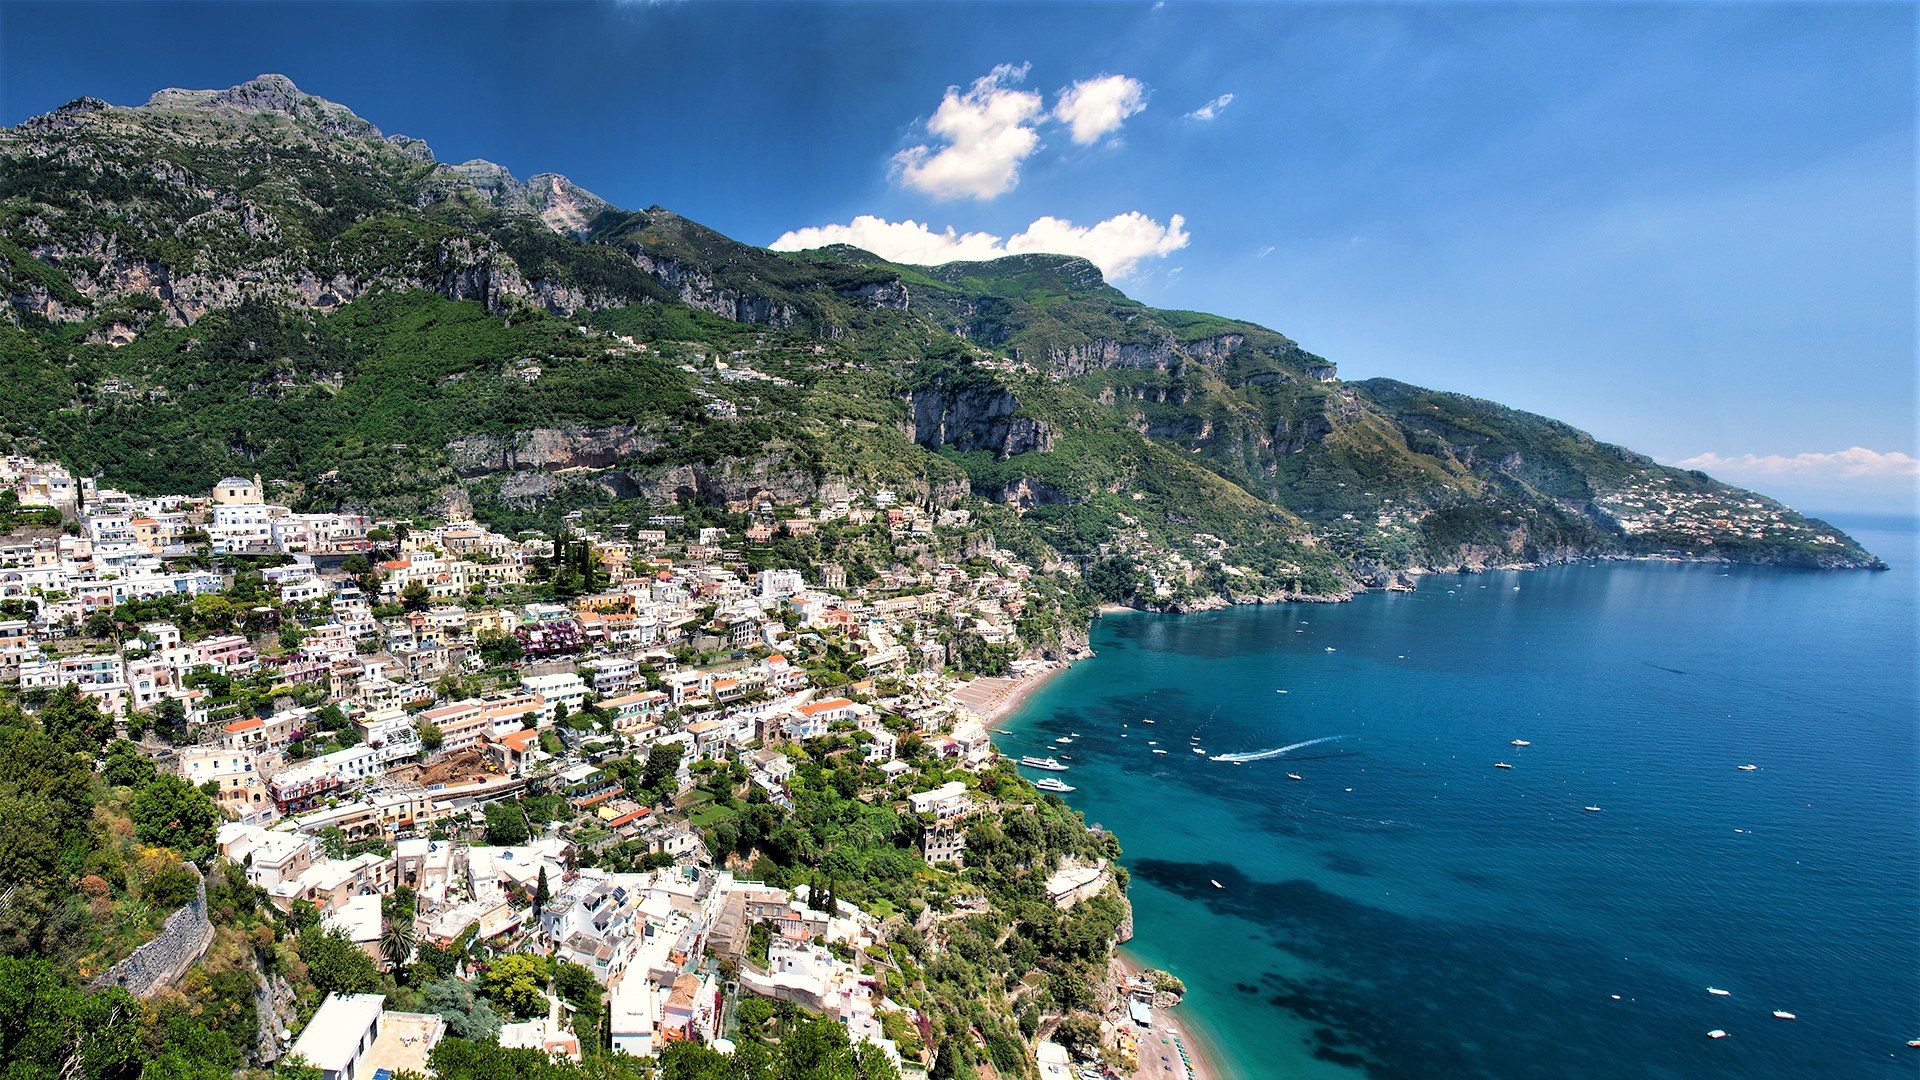 Amalfi Coast of Italy